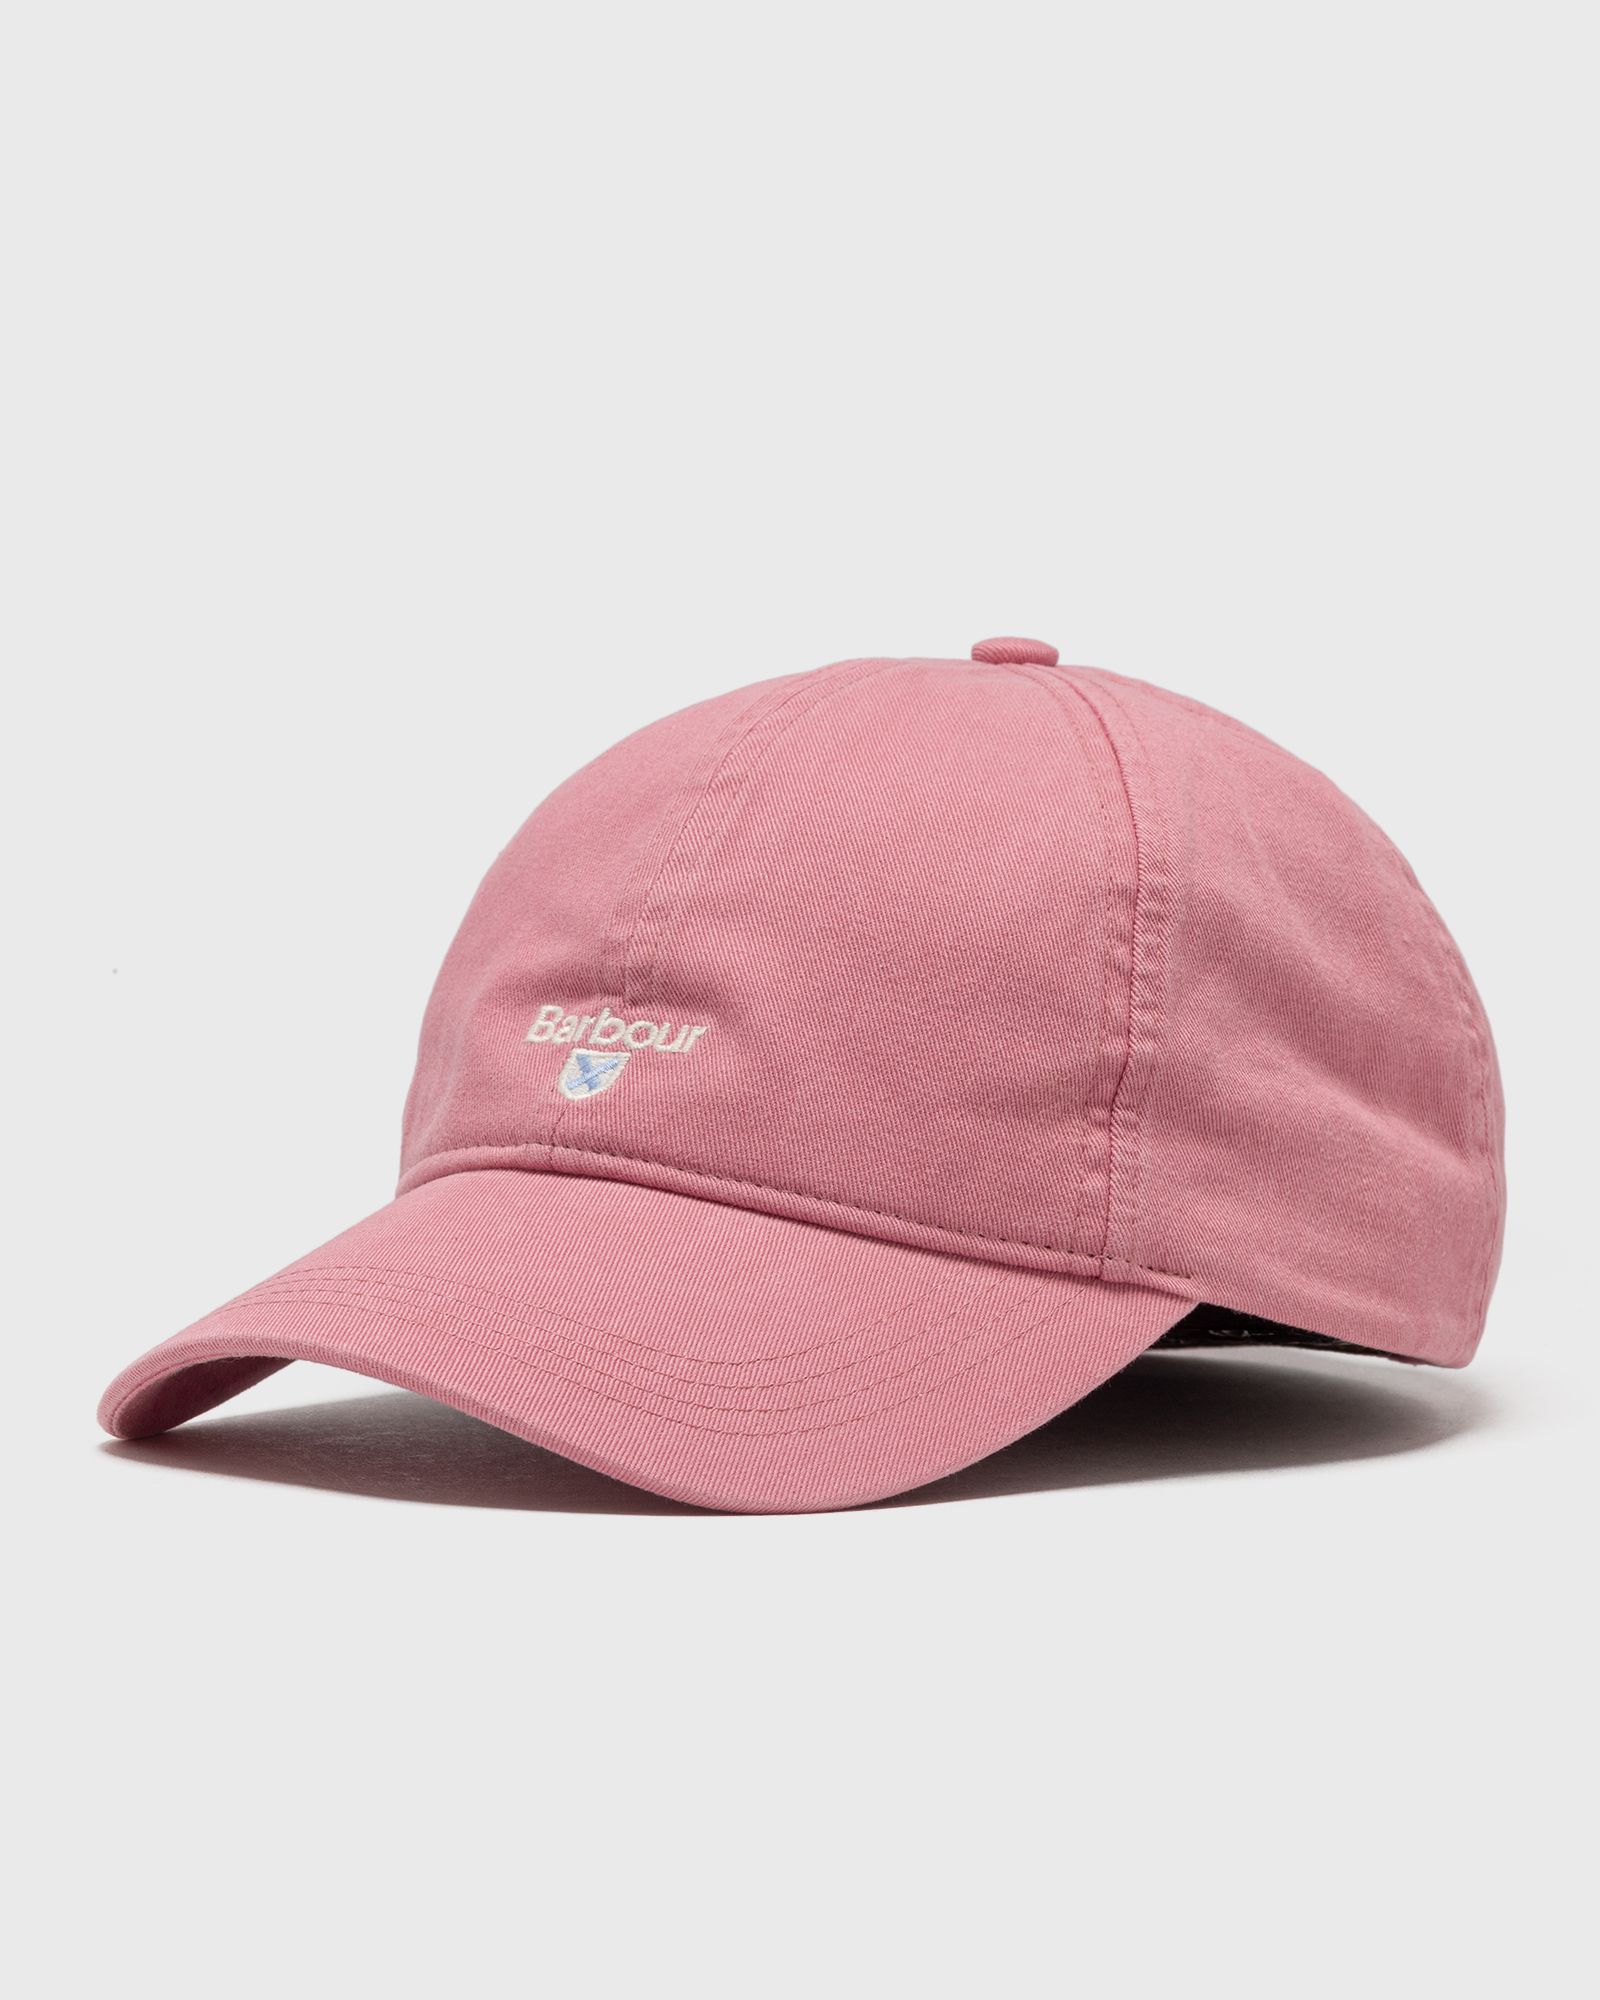 Barbour - cascade sports cap men caps pink in größe:one size